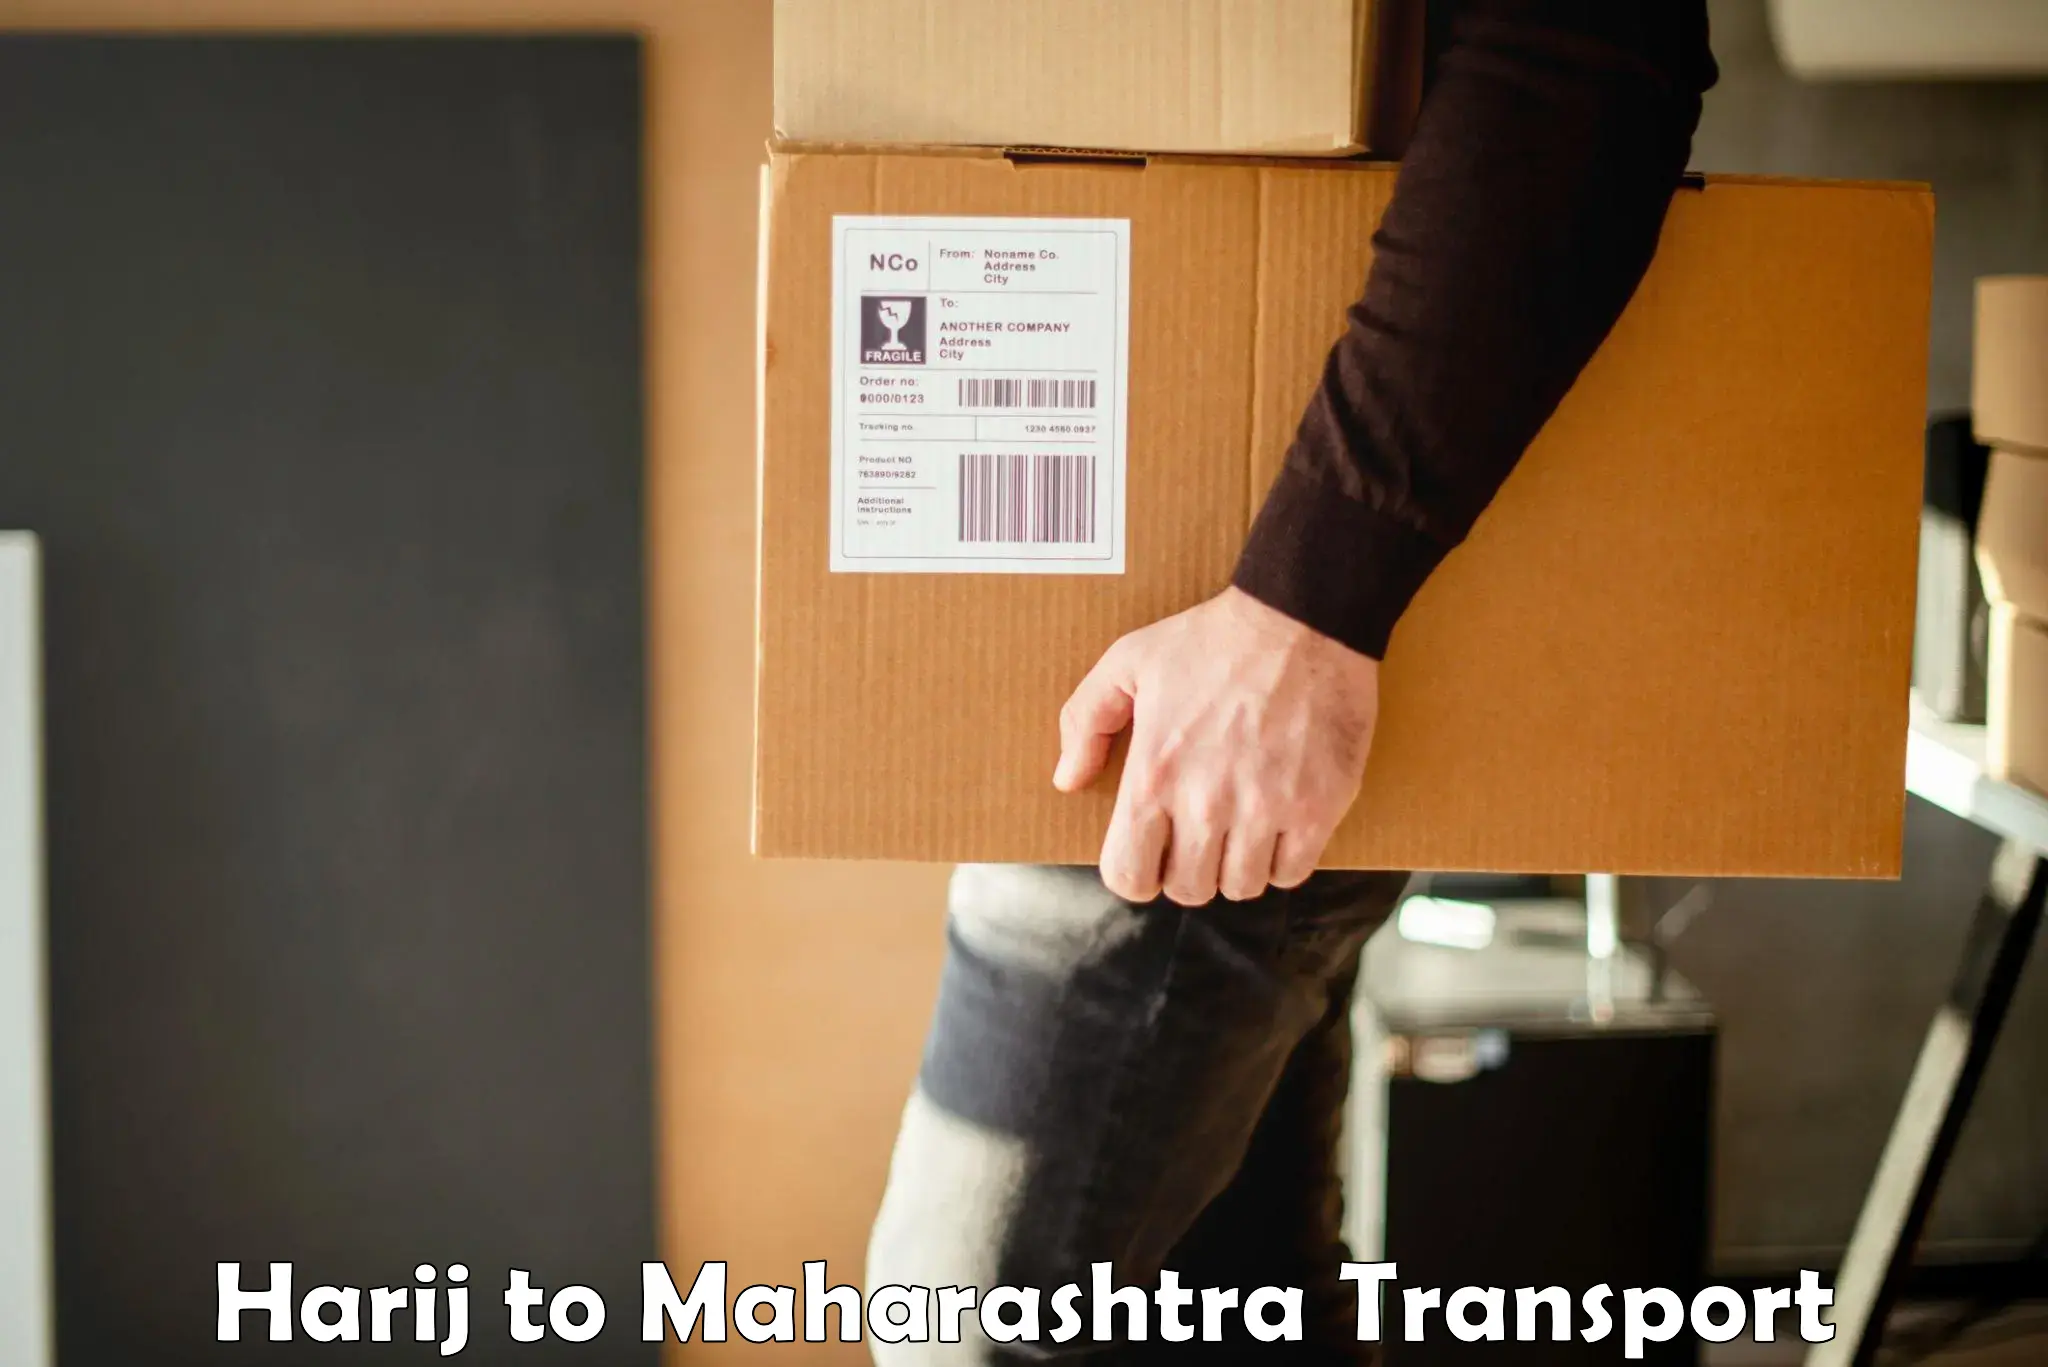 Furniture transport service Harij to Tuljapur